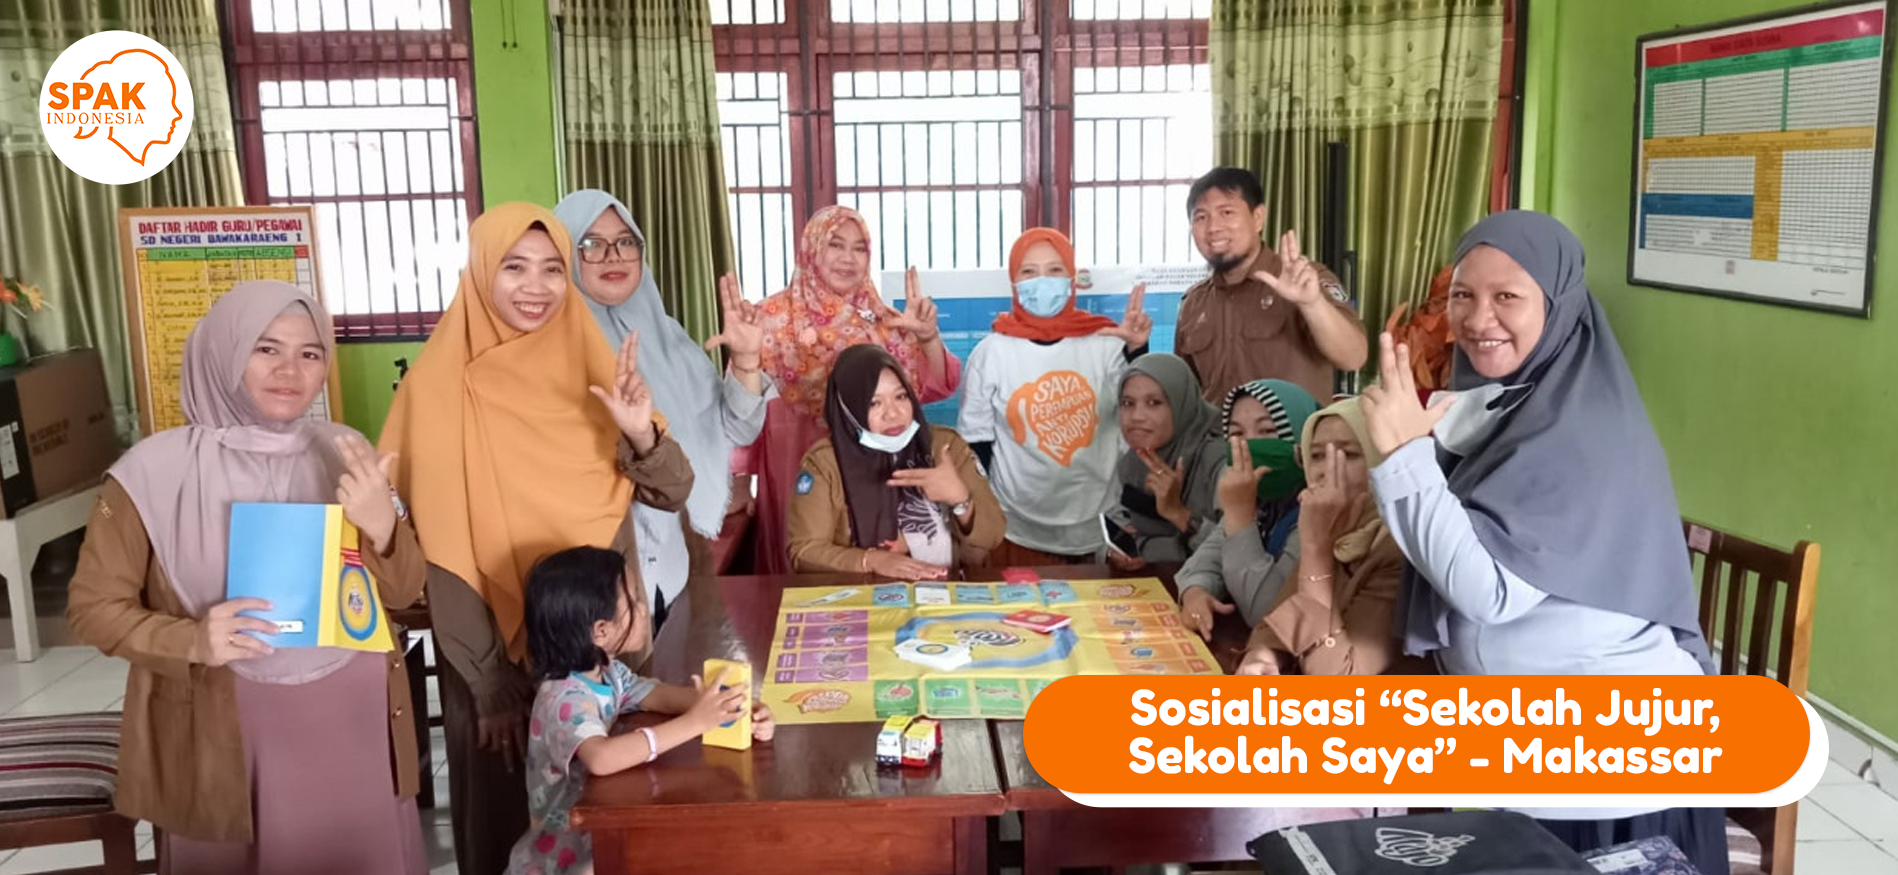 Sosialisasi Sekolah Jujur Sekolah Saya Makassar Bawakaraeng